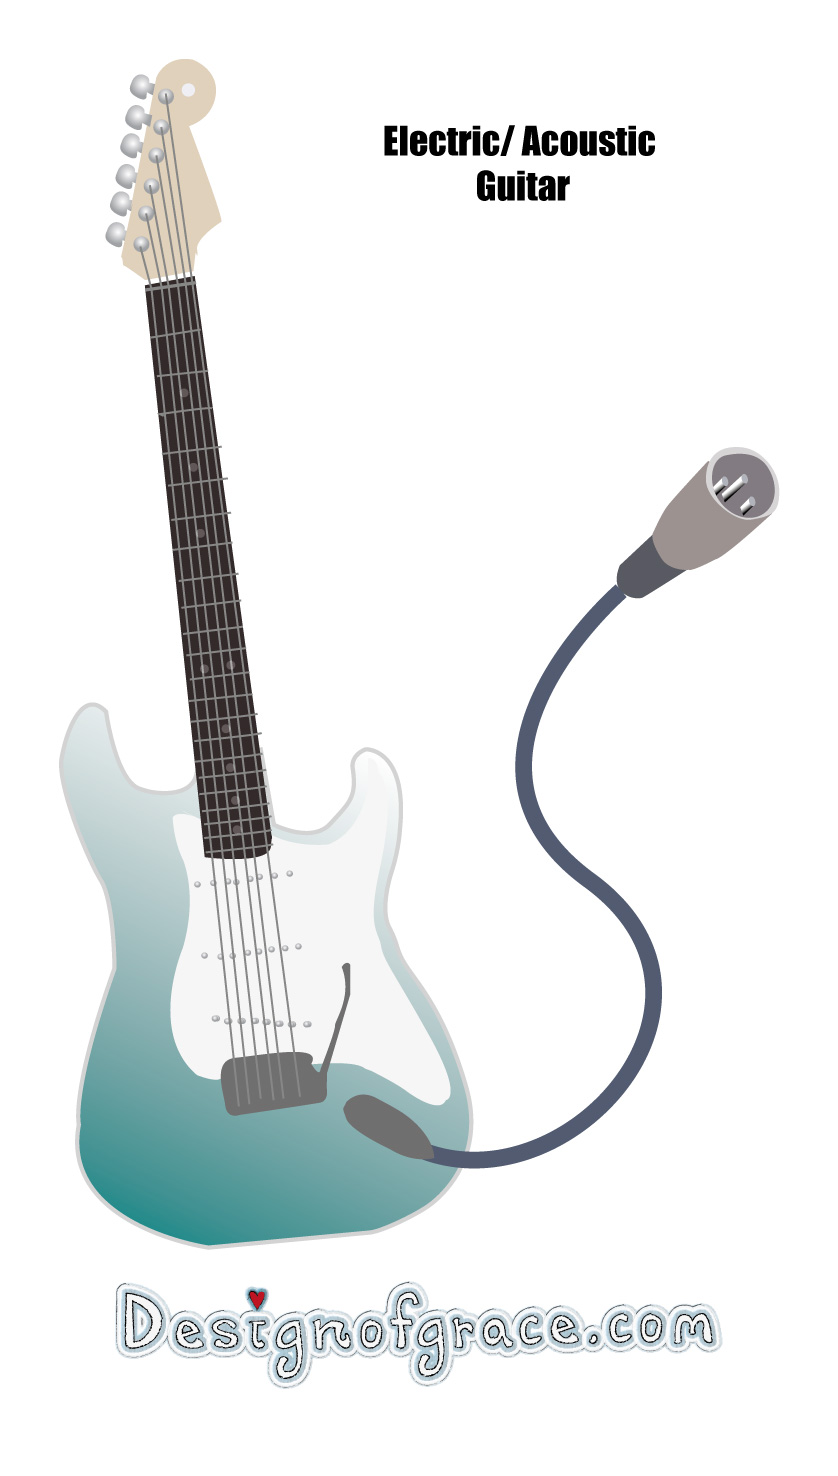 Illustration of a Electric Guitar for a home studio setup